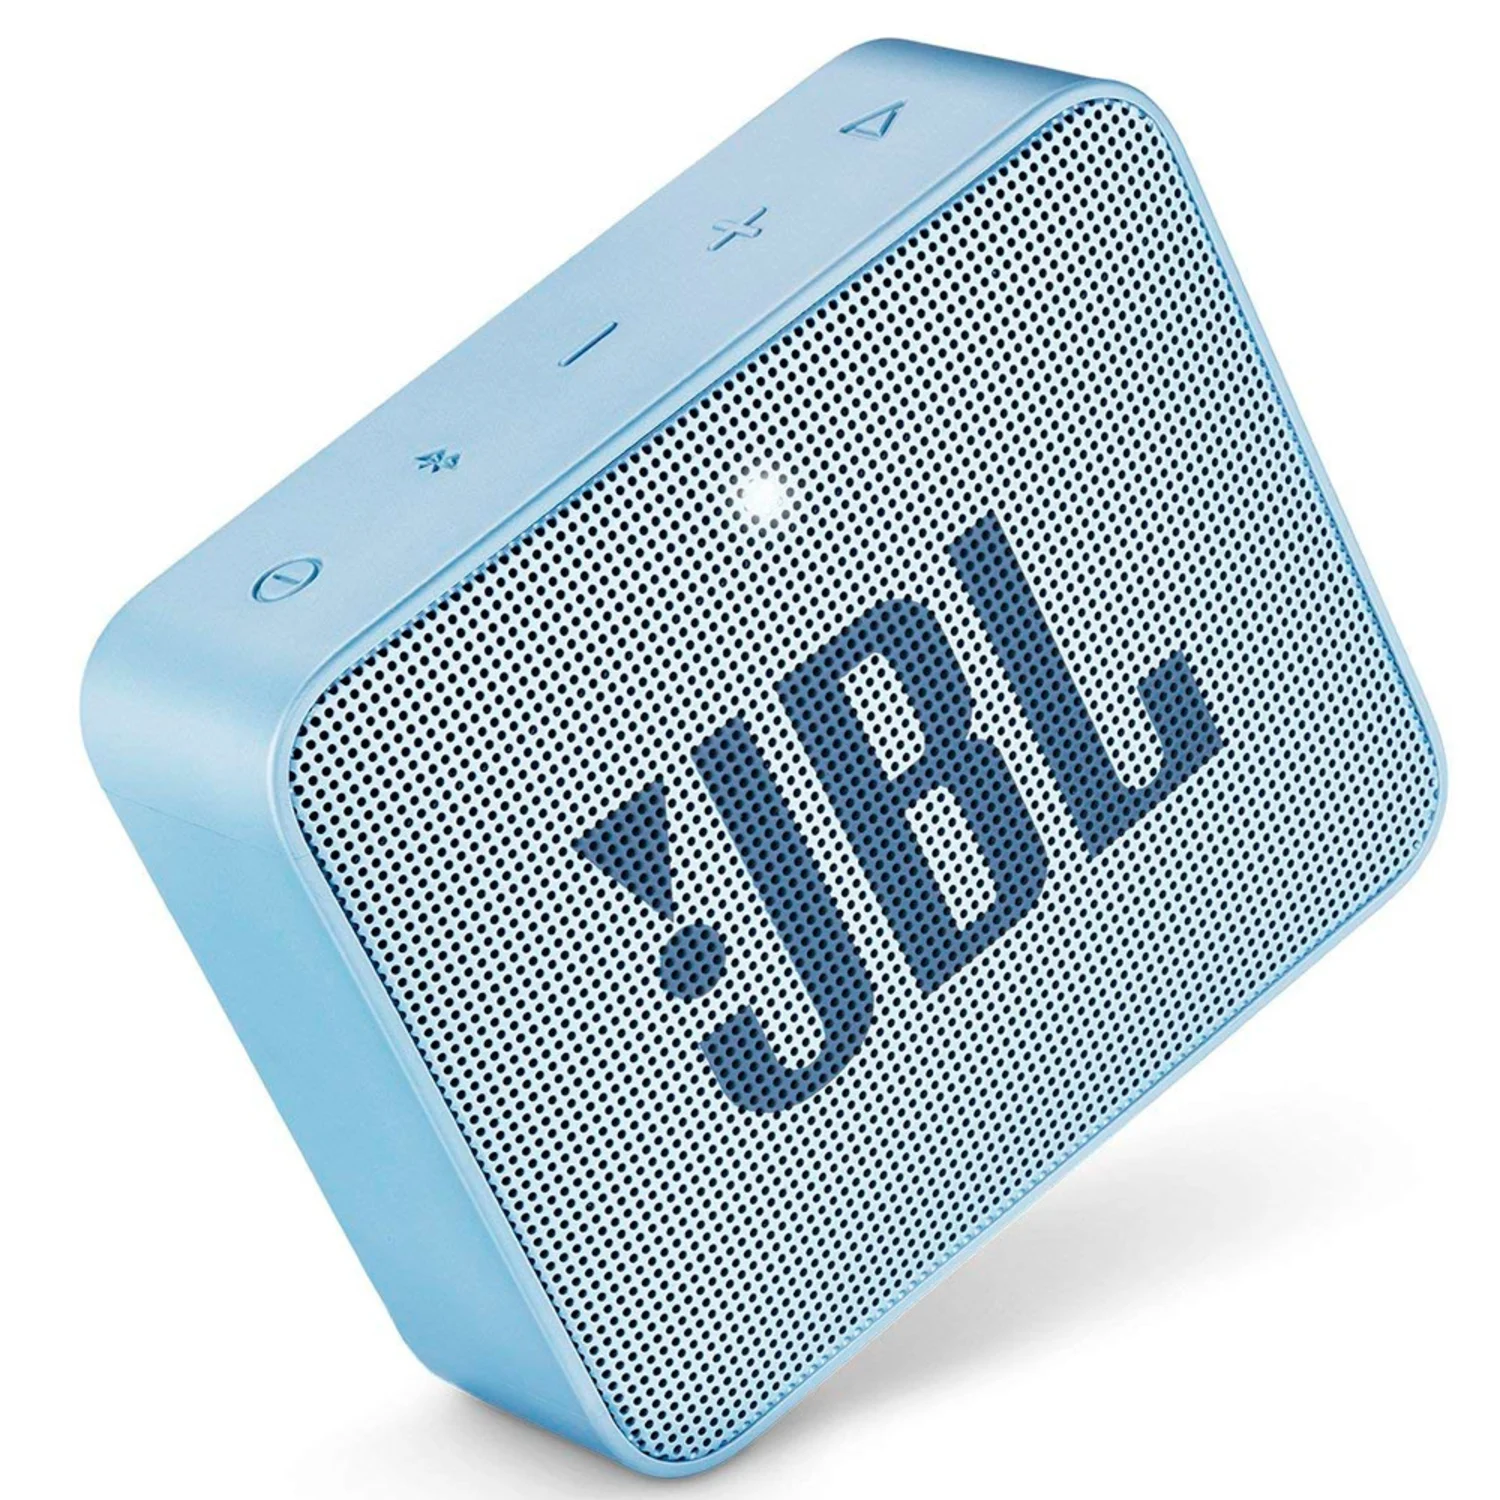 Caixa de Som JBL GO 2 - Ciano